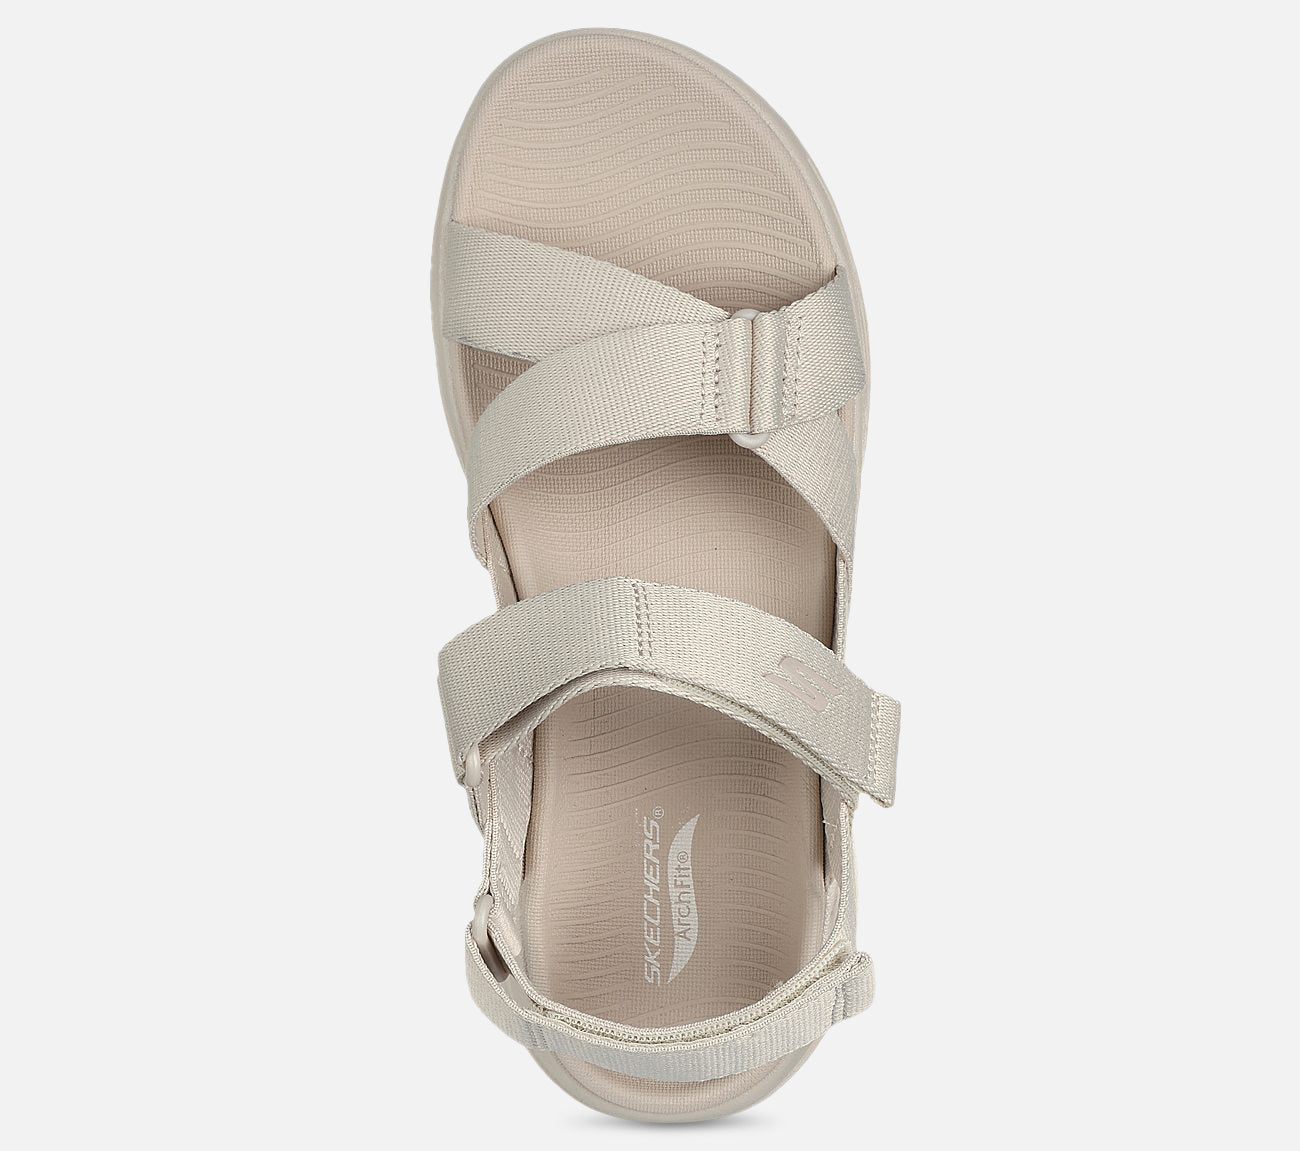 GO WALK Arch Fit Sandal  - Attract Sandal Skechers